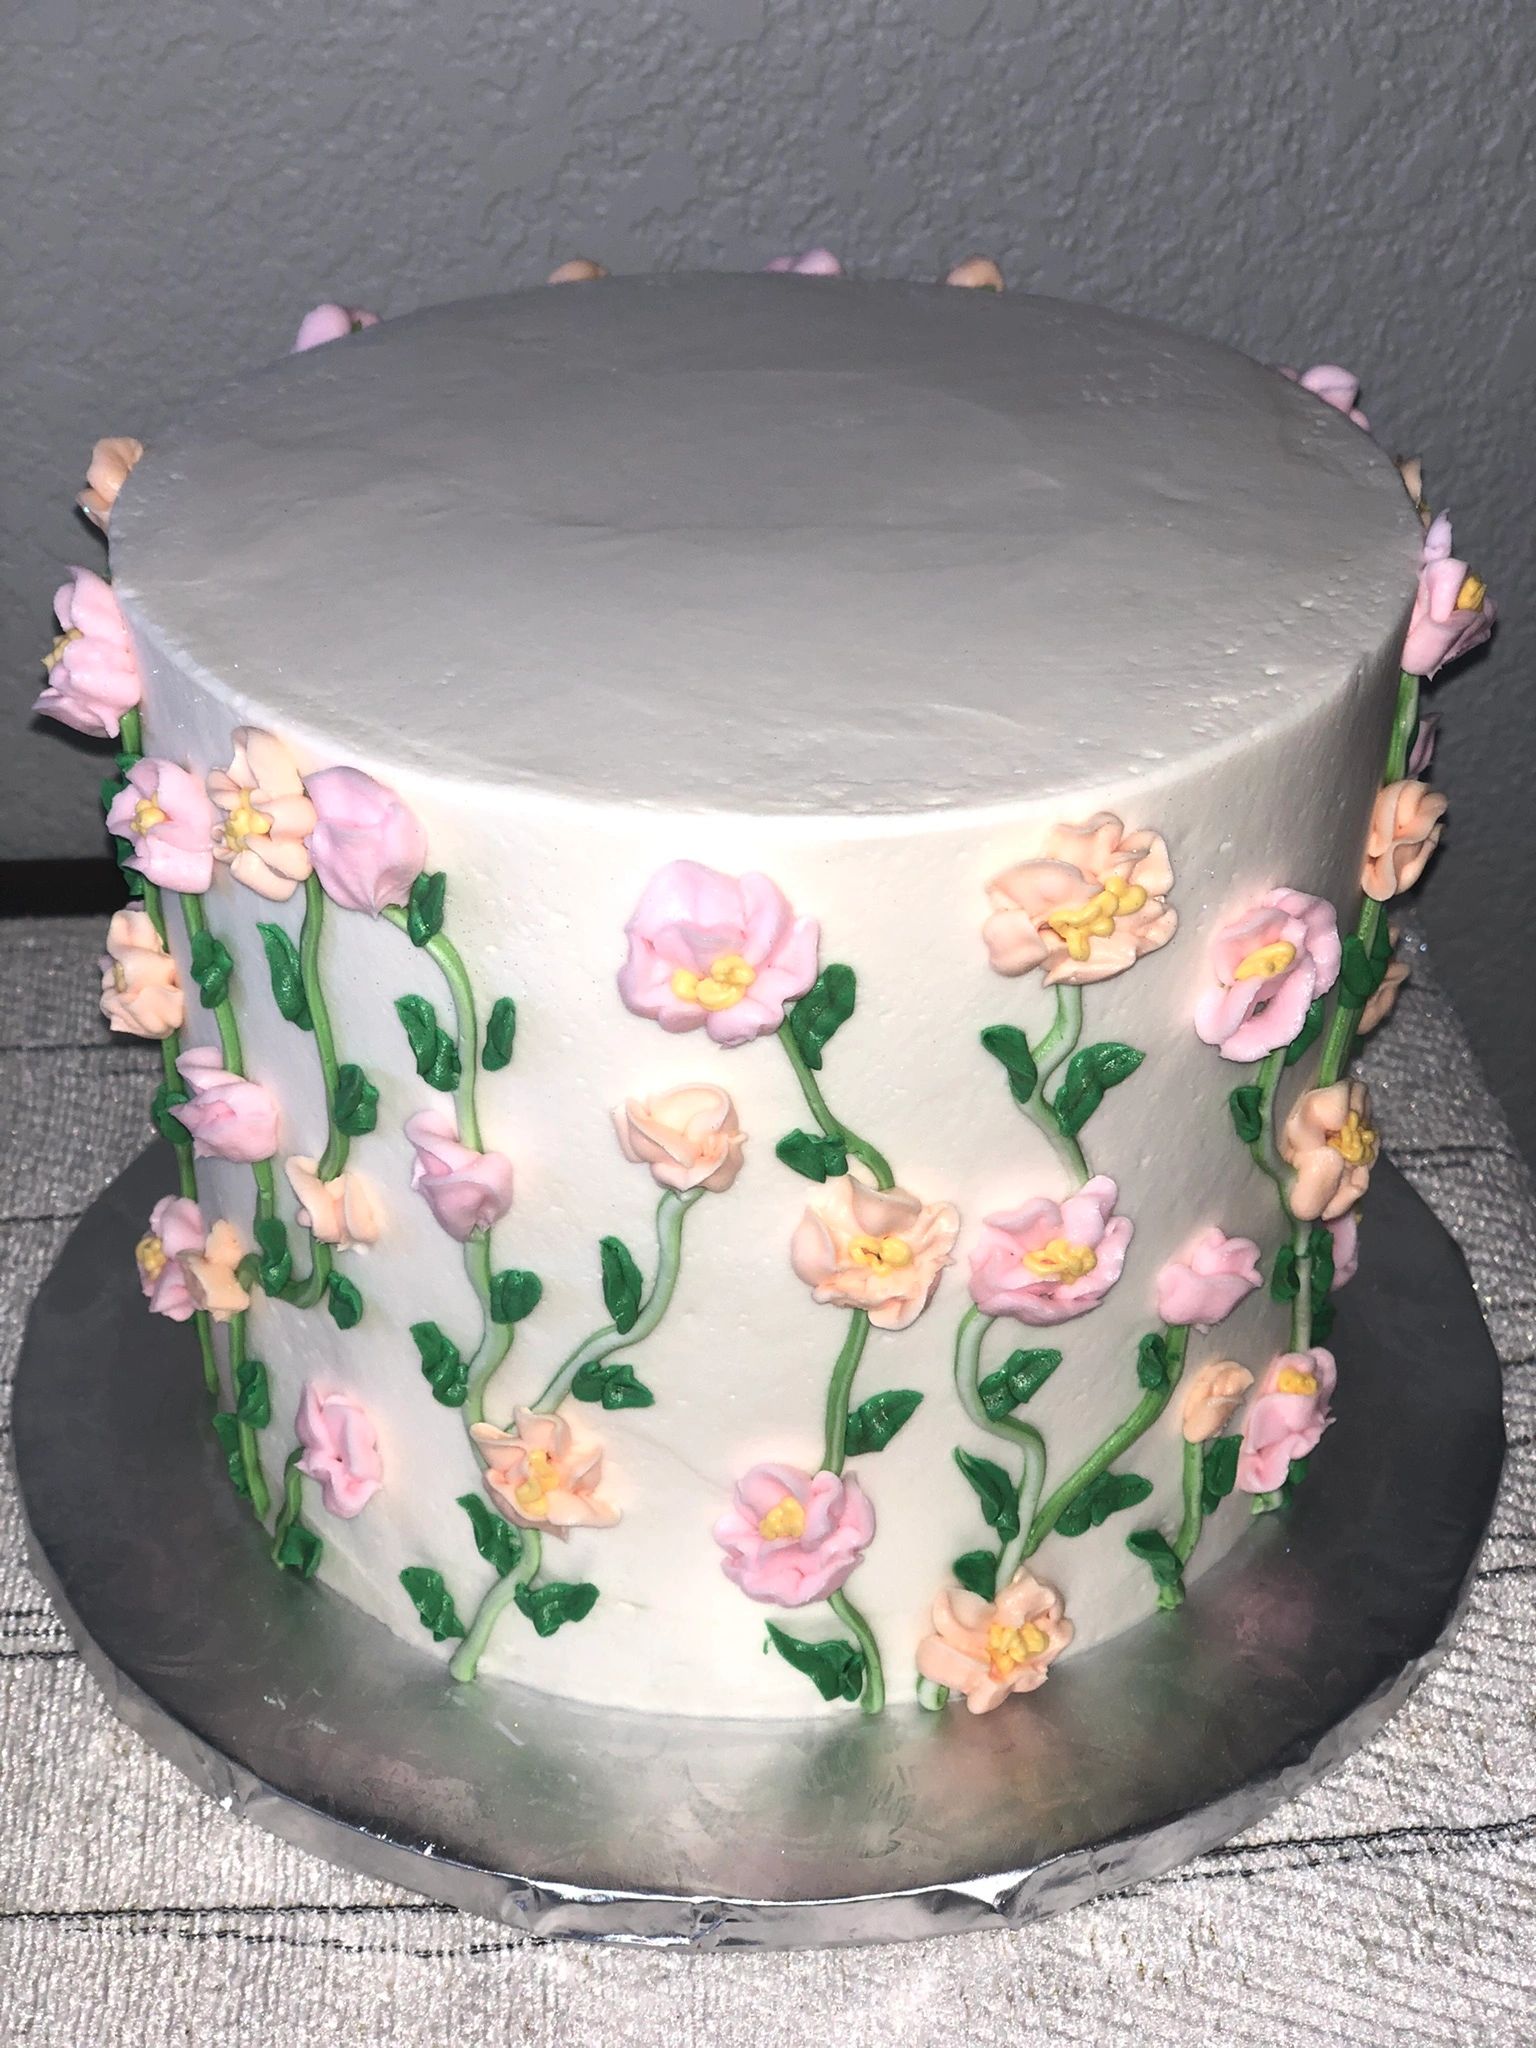 Birthday Cakes – David's Custom Cakes